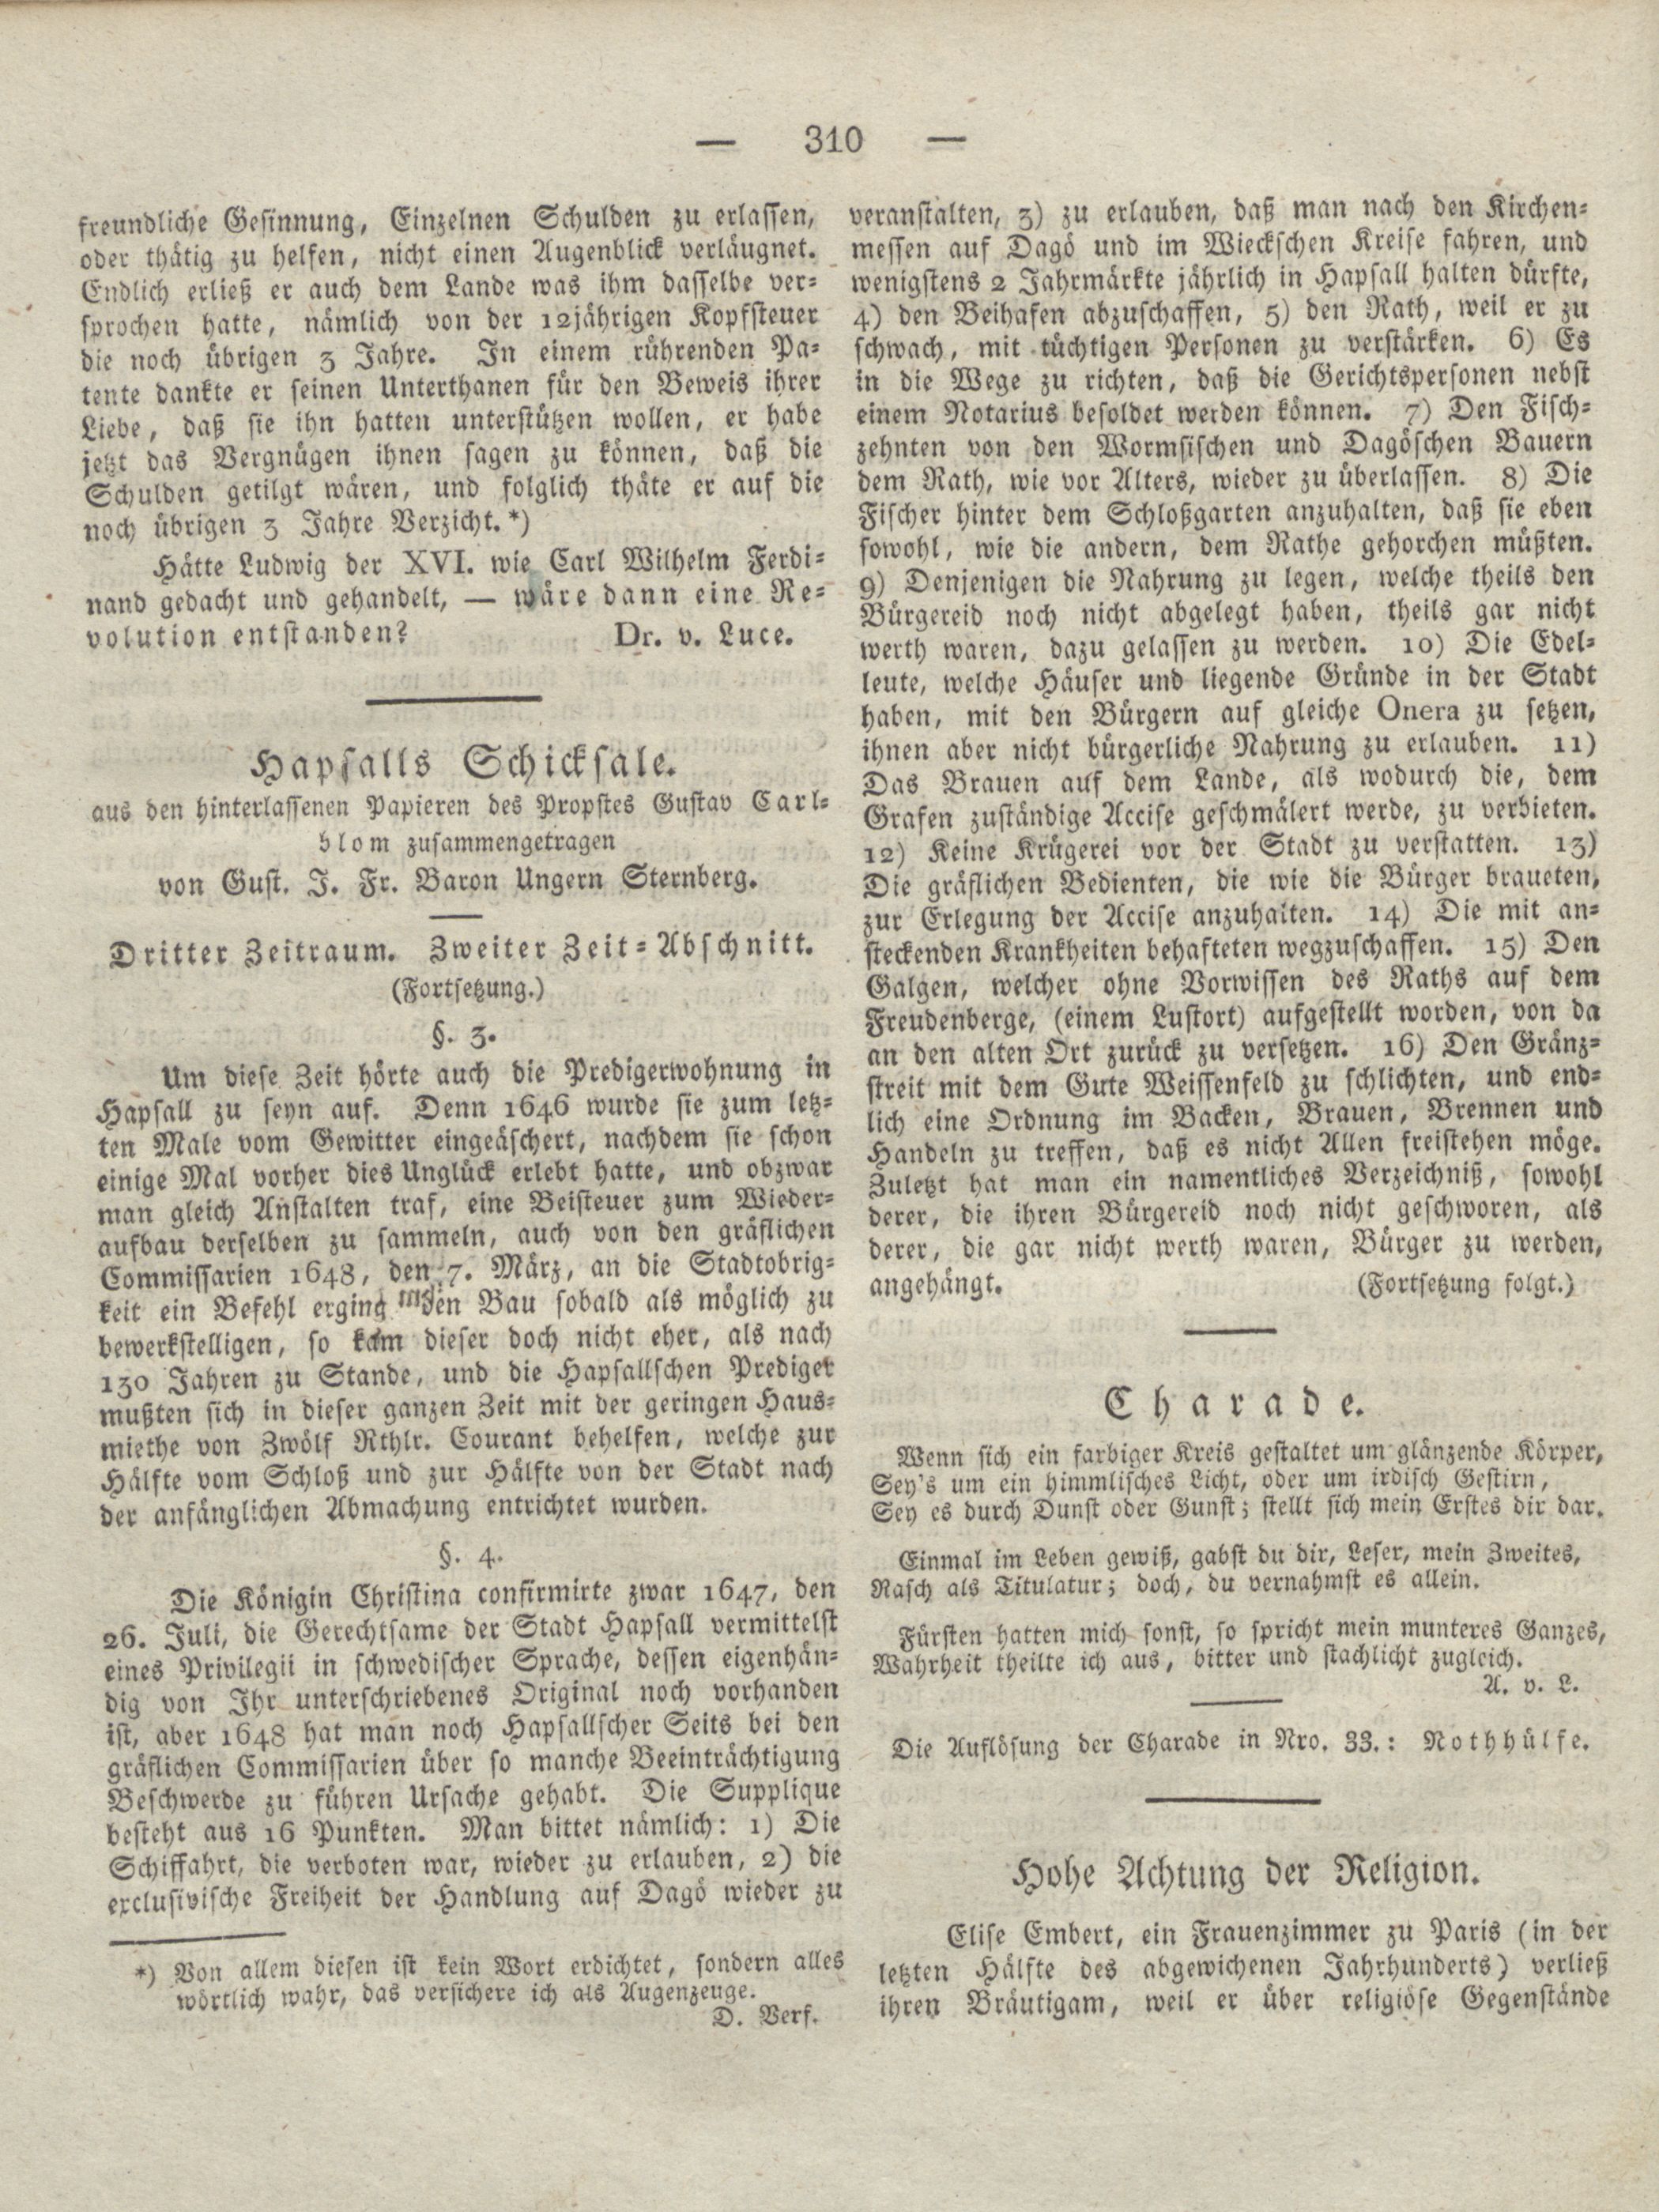 Hapsalls Schicksale [10] (1829) | 1. (310) Main body of text